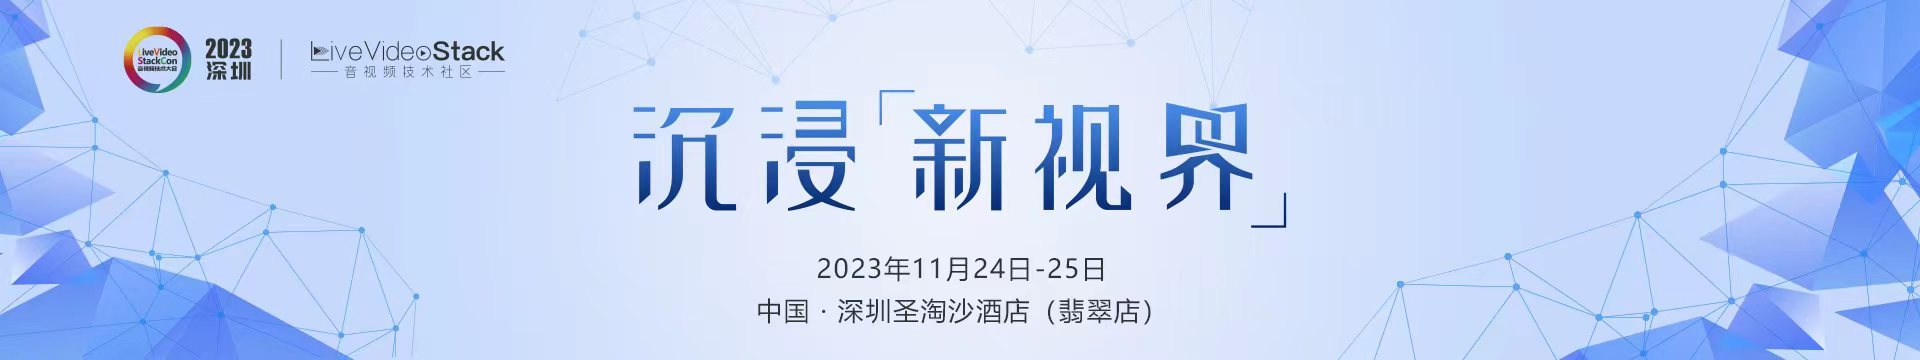 LiveVideoStackCon 2023 · 深圳（音視頻技術大會）